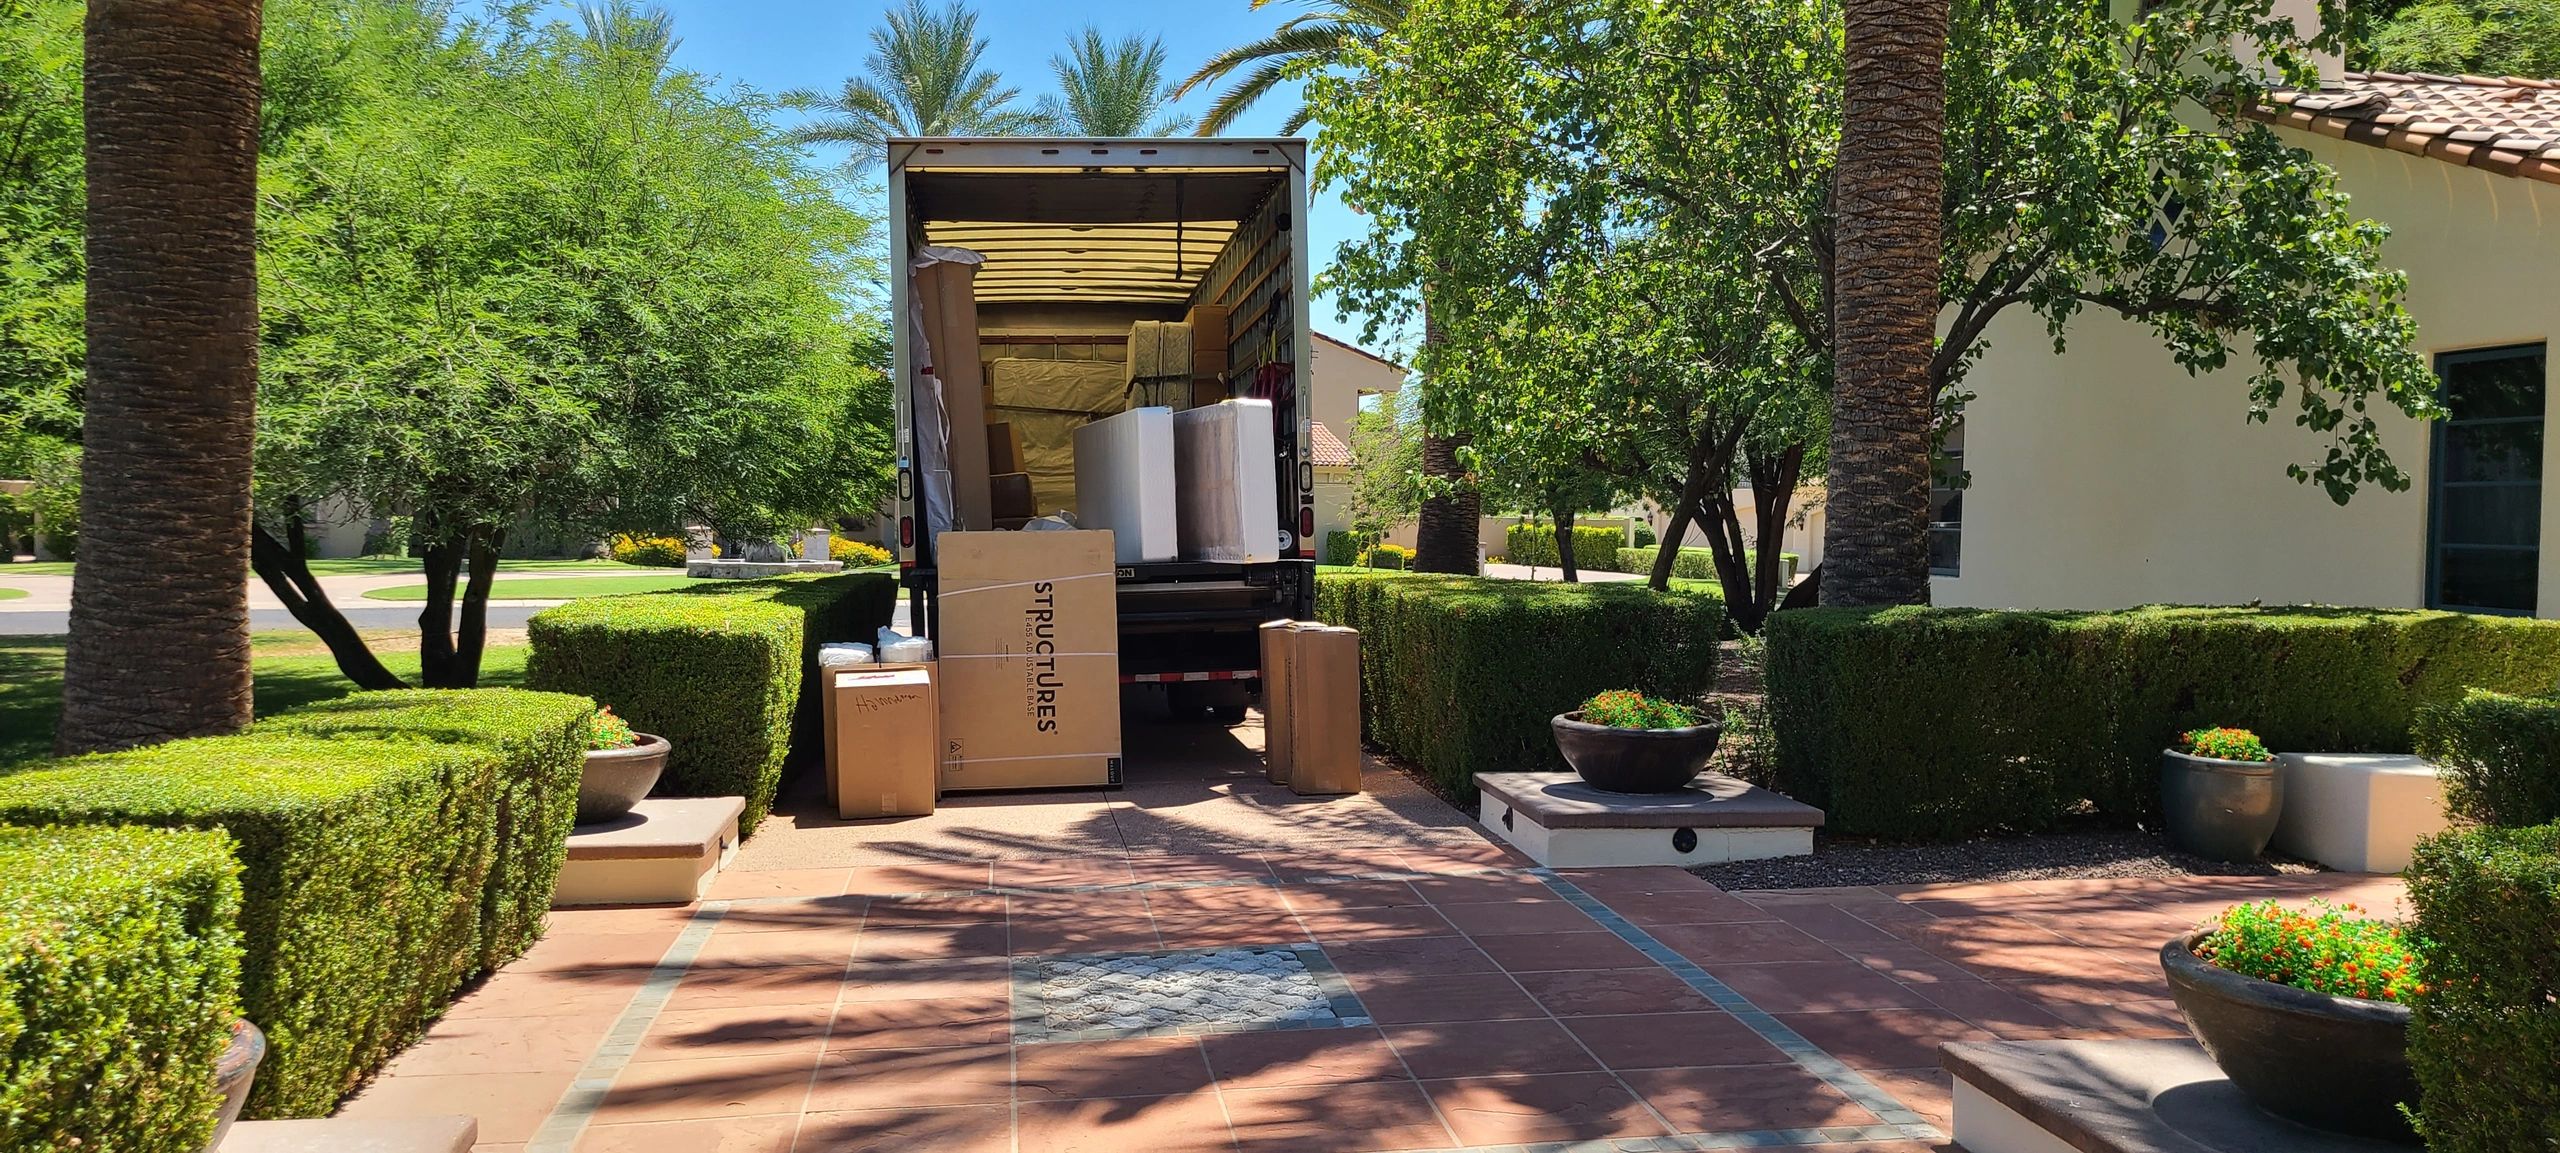 Premium white glove delivery services in Scottsdale, Tempe, Mesa, Chandler, Phoenix and Arizona.